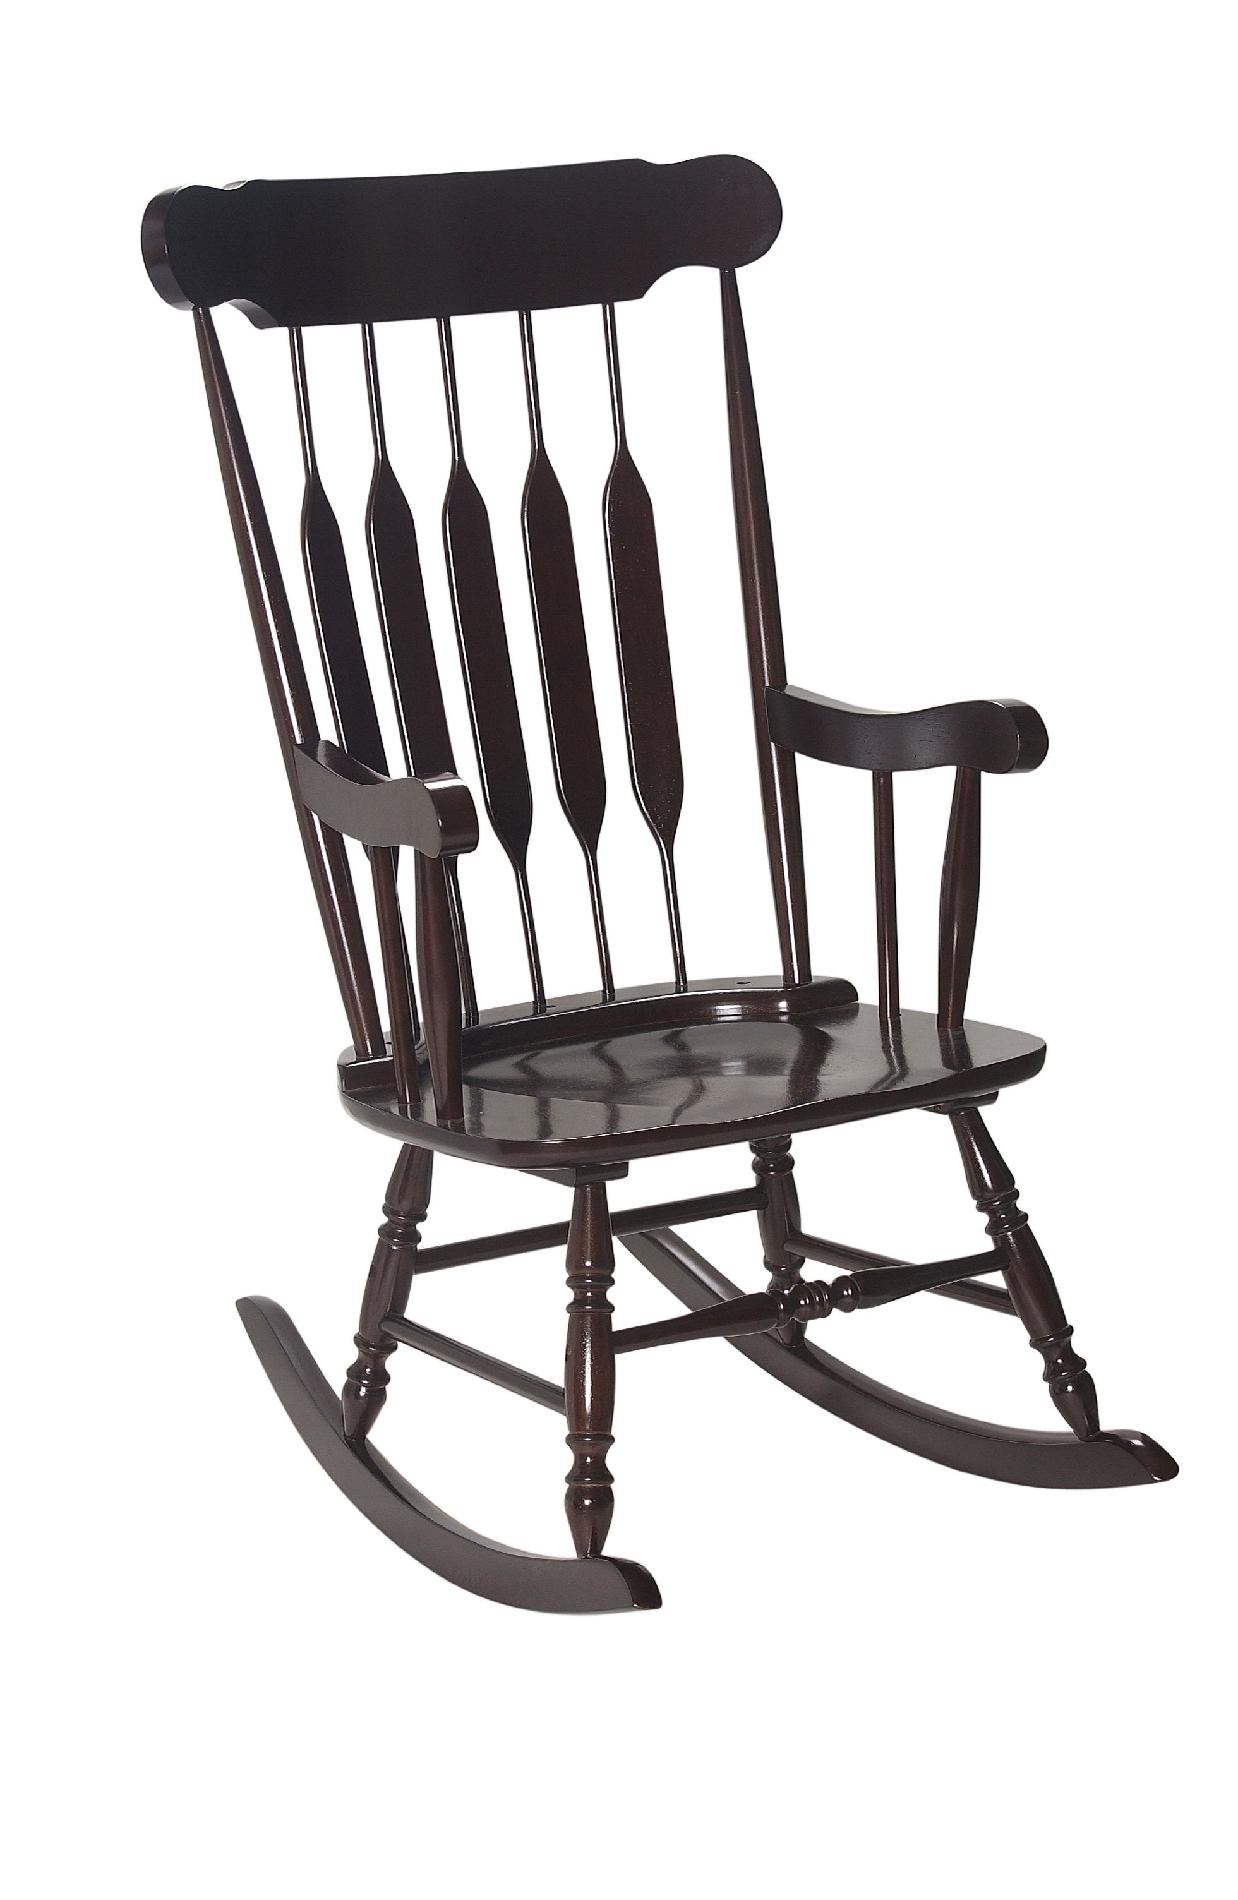 Gift Mark 3800E Adult Rocking Chair - Espresso